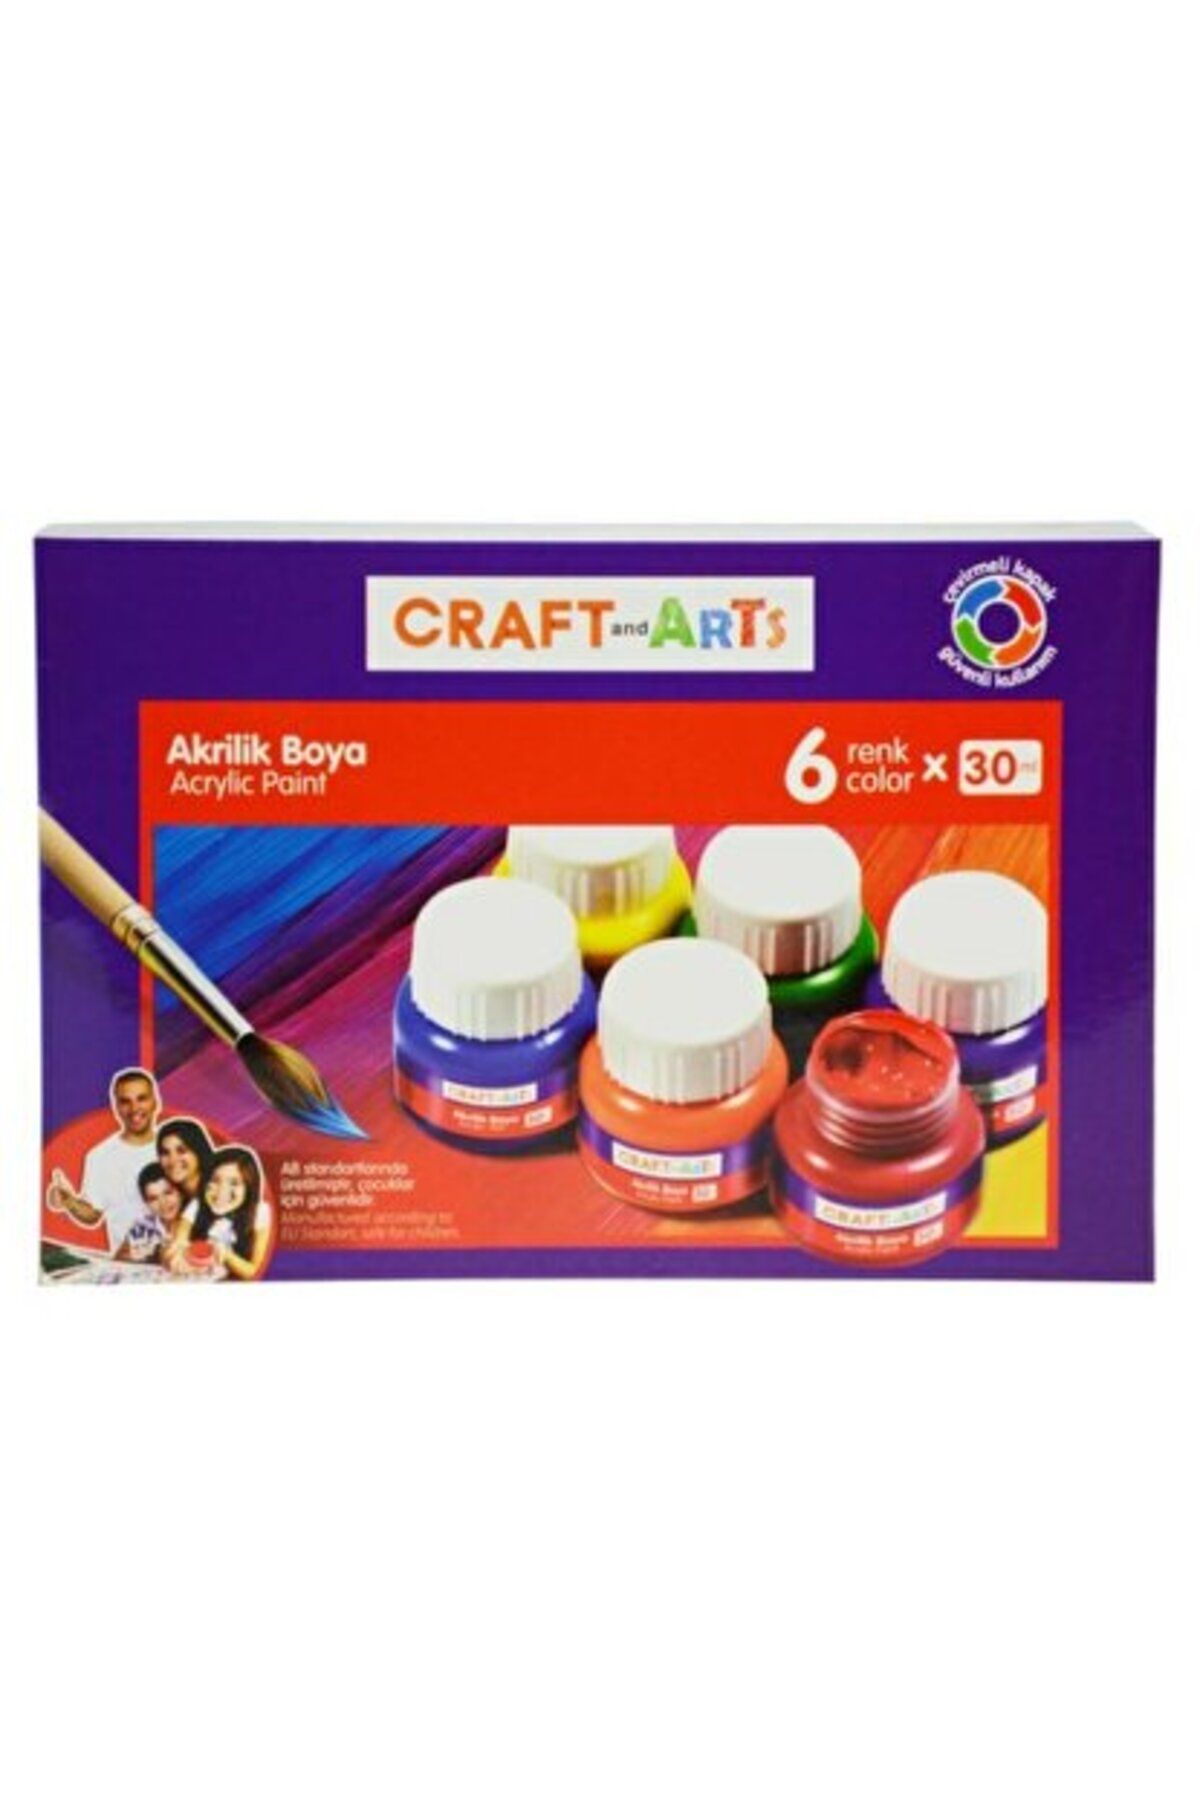 Craft and Arts Akrilik Boya 6 Renk30 ml U1560kk-6